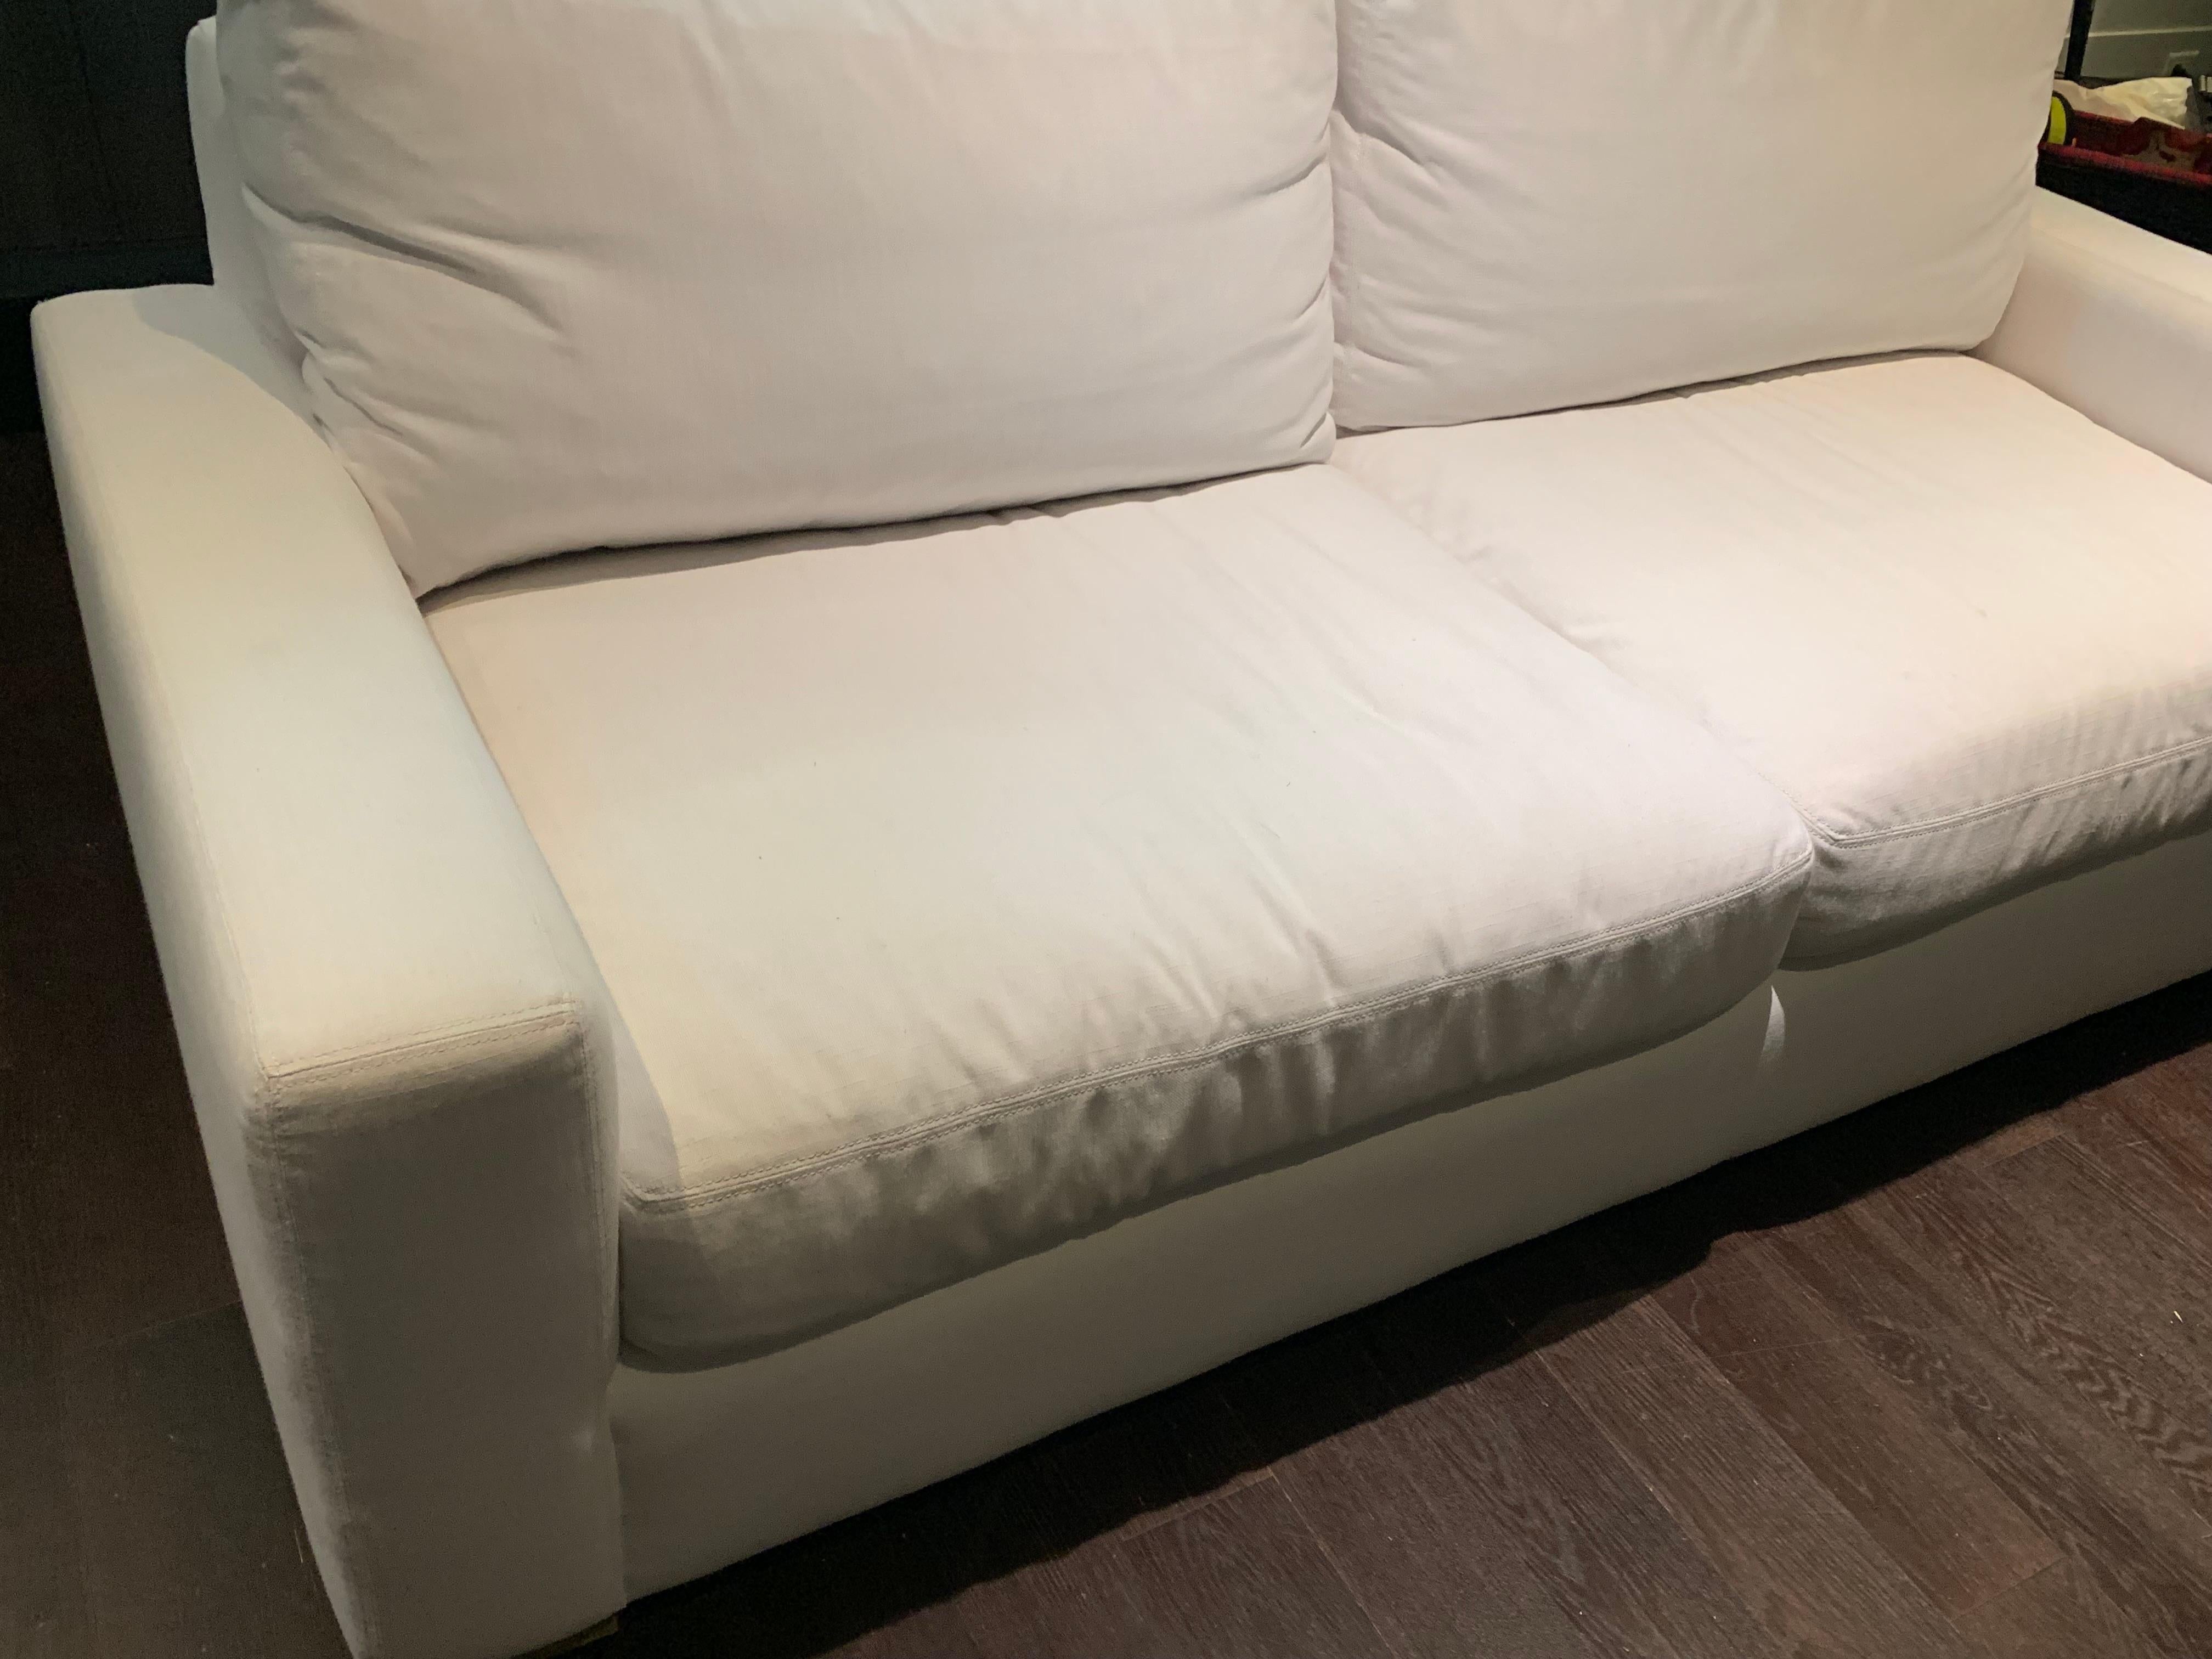 American Restoration Hardware Maxwell Sofa in White Linen Slipcover